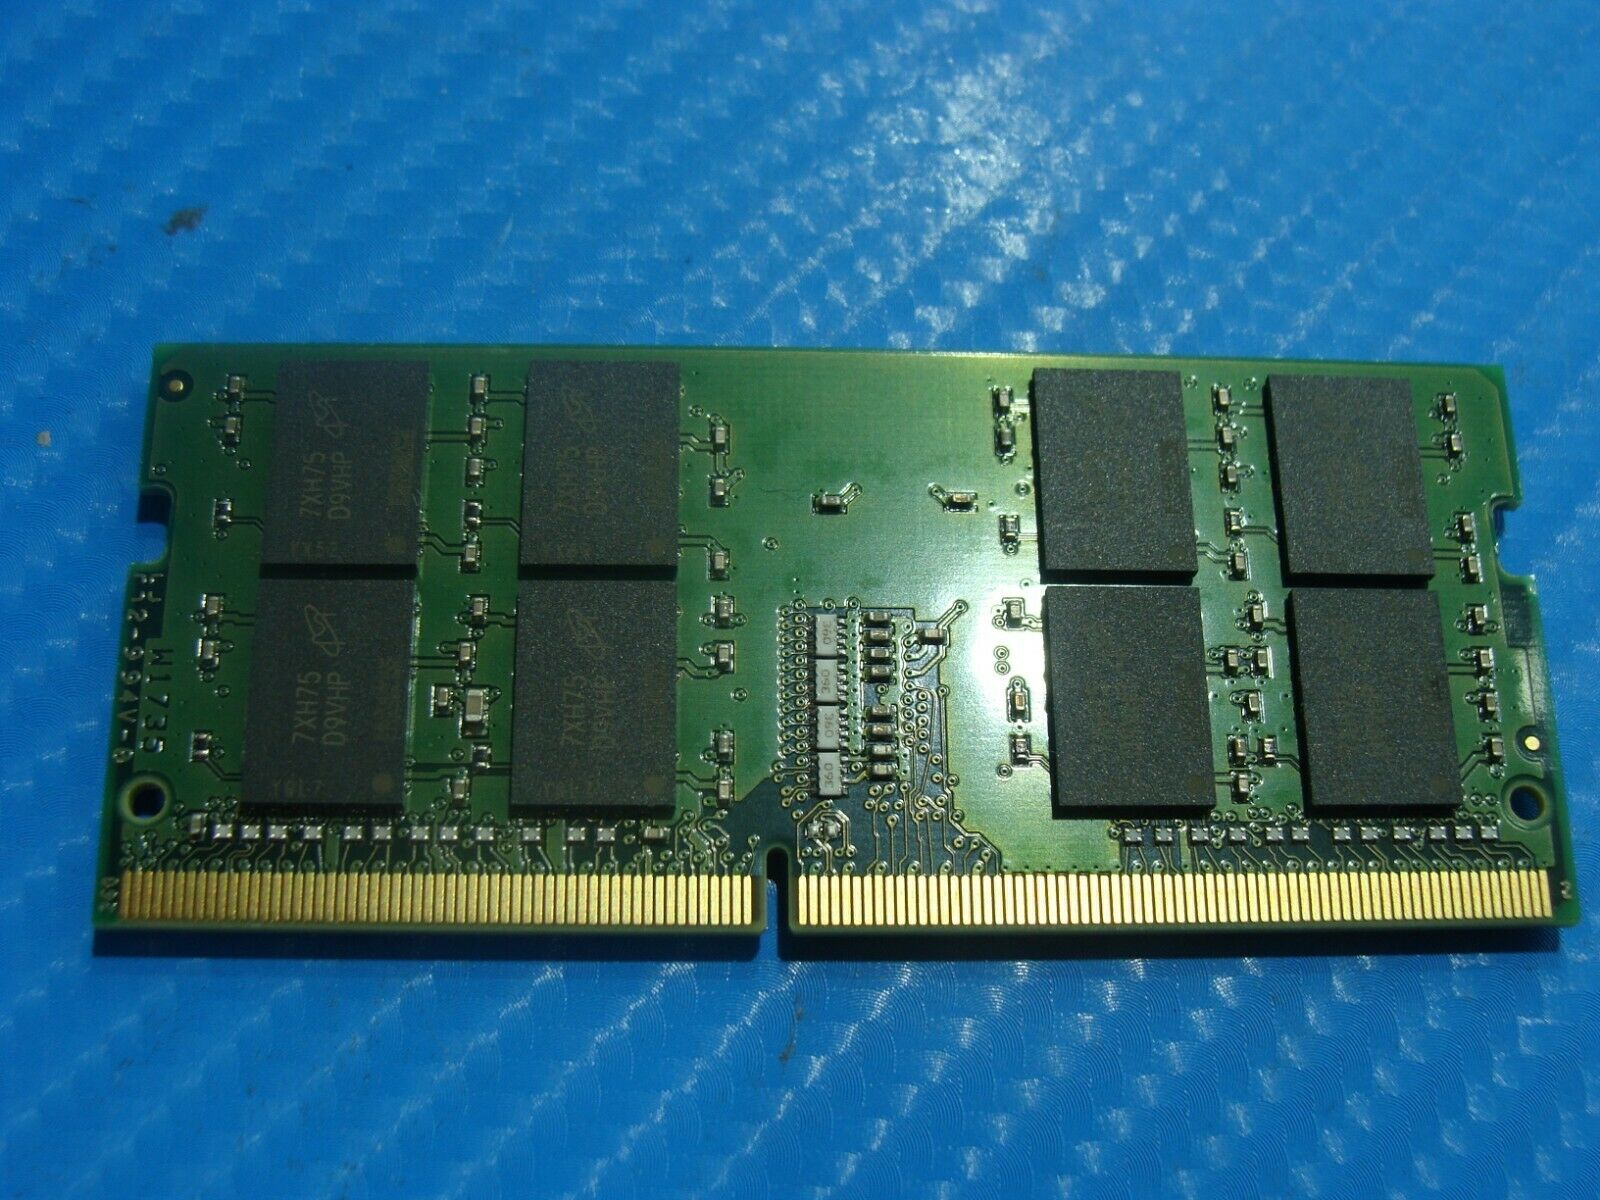 Dell 5520 So-Dimm Kingston 16GB Memory Ram pc4-2400t-se1-11 9995630-024.a00g 